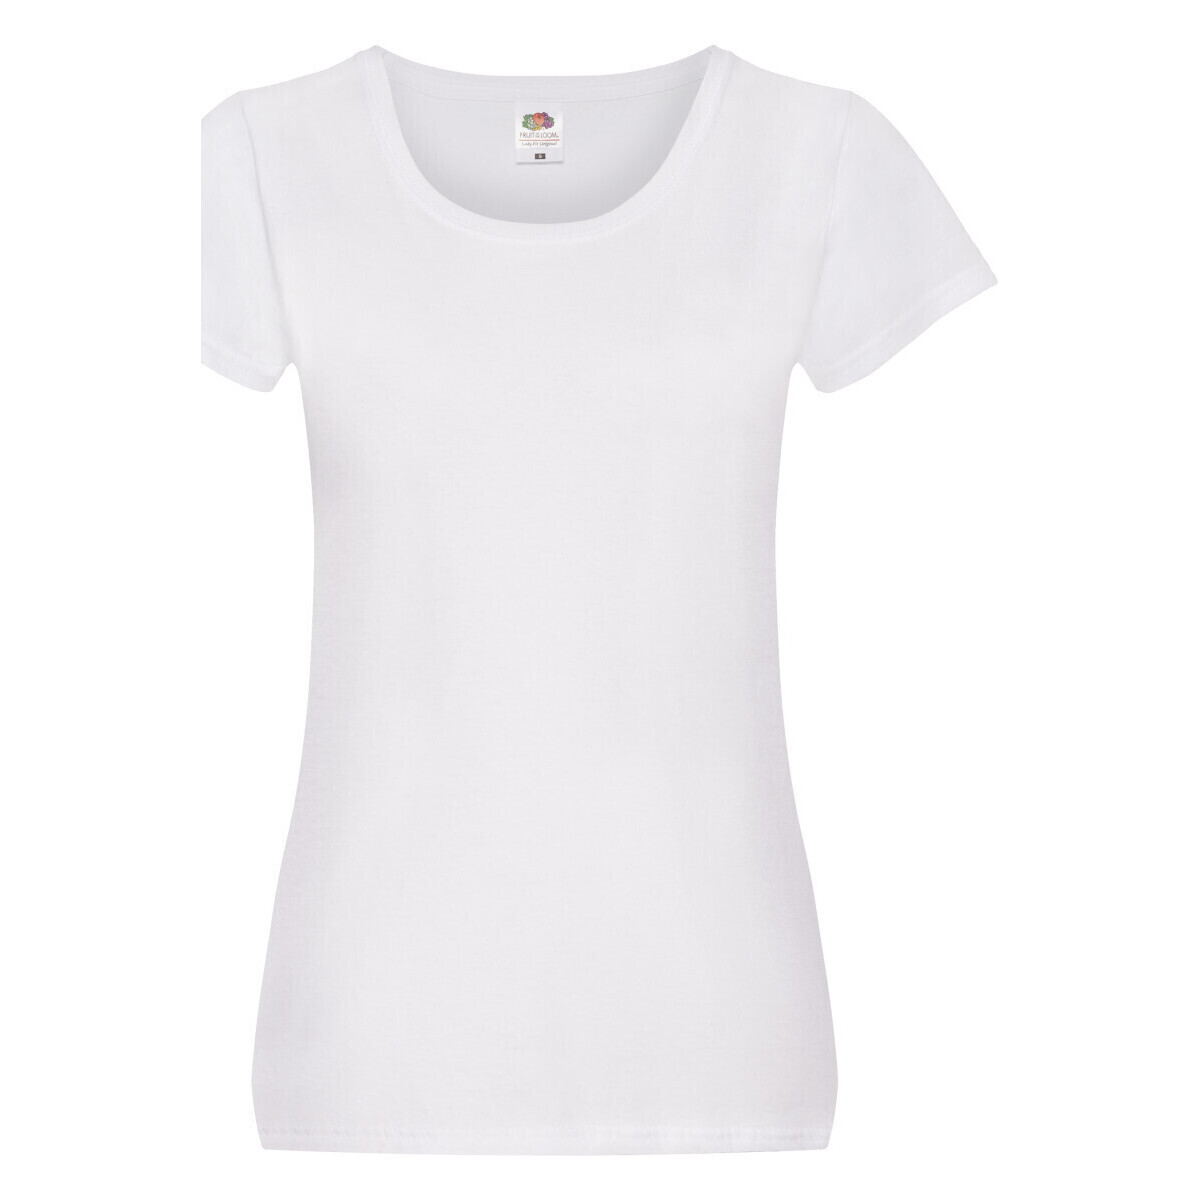 Vêtements Femme T-shirts manches longues Fruit Of The Loom Original Blanc